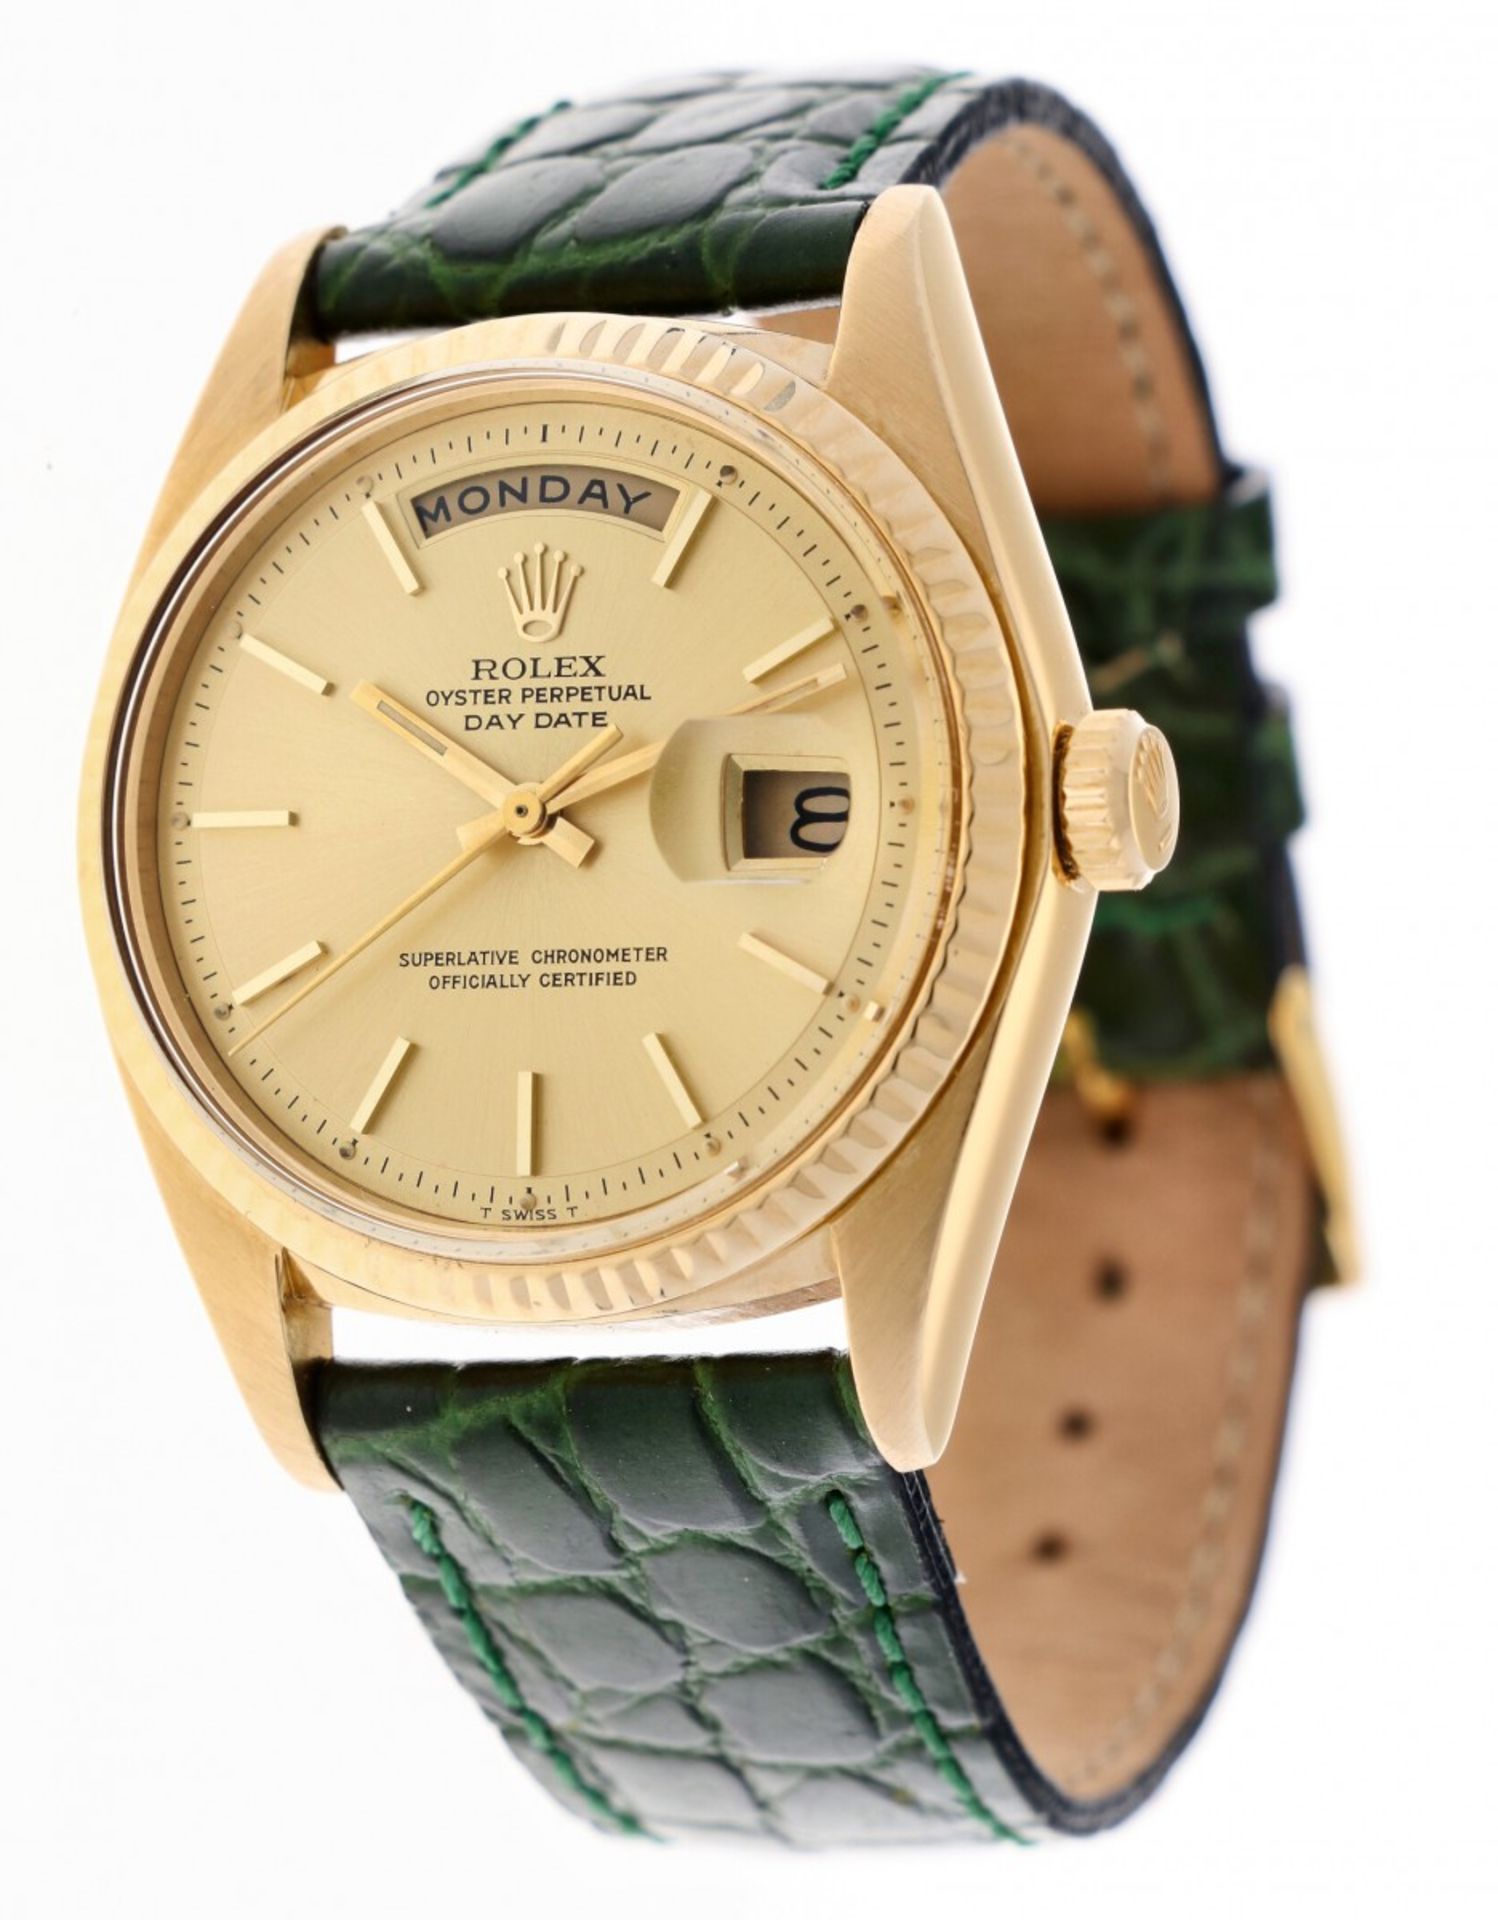 Rolex day date 1803 - Men's watch - ca. 1974 - Image 2 of 6